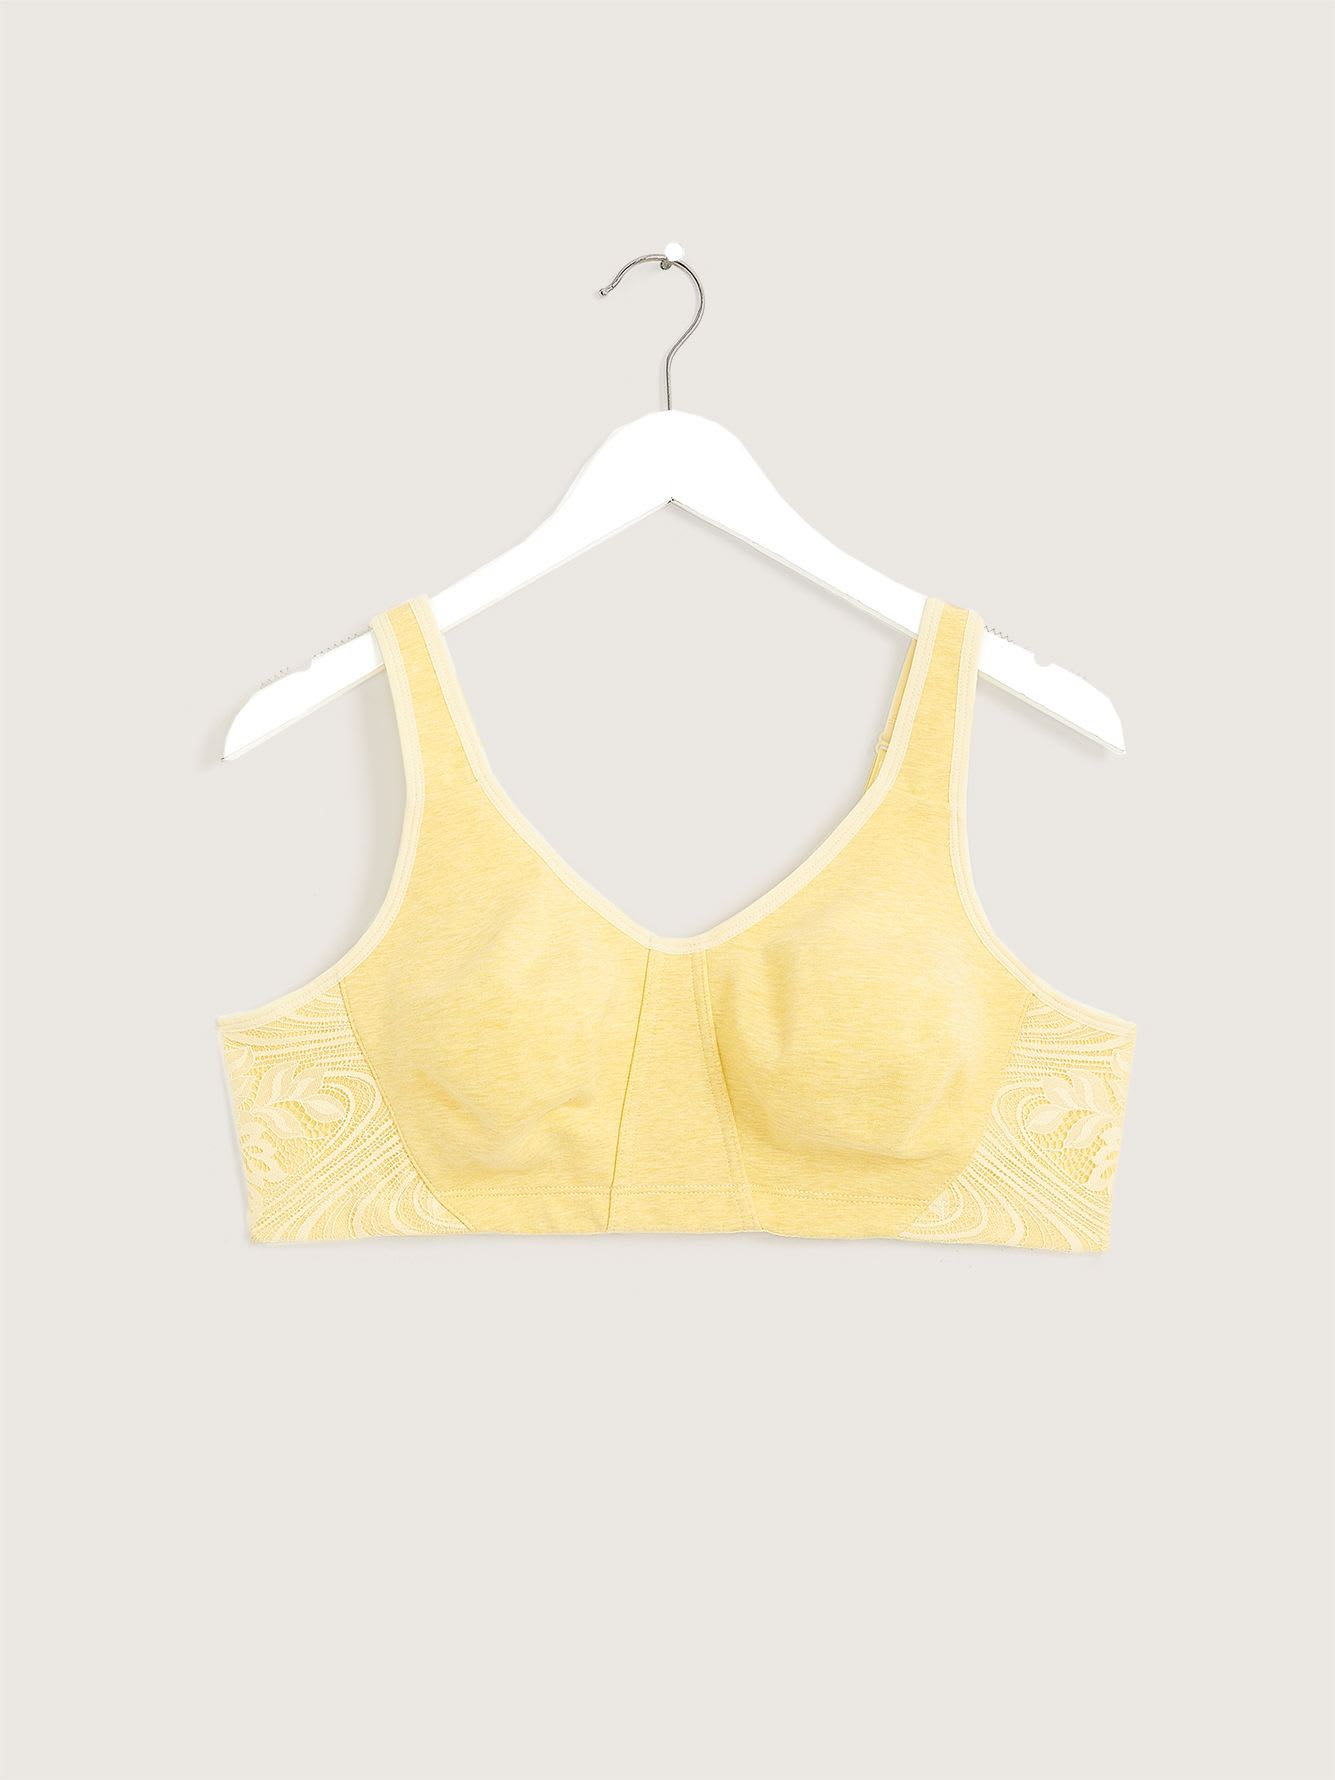 Wireless bra, Oval bra, Organic cotton, yellow